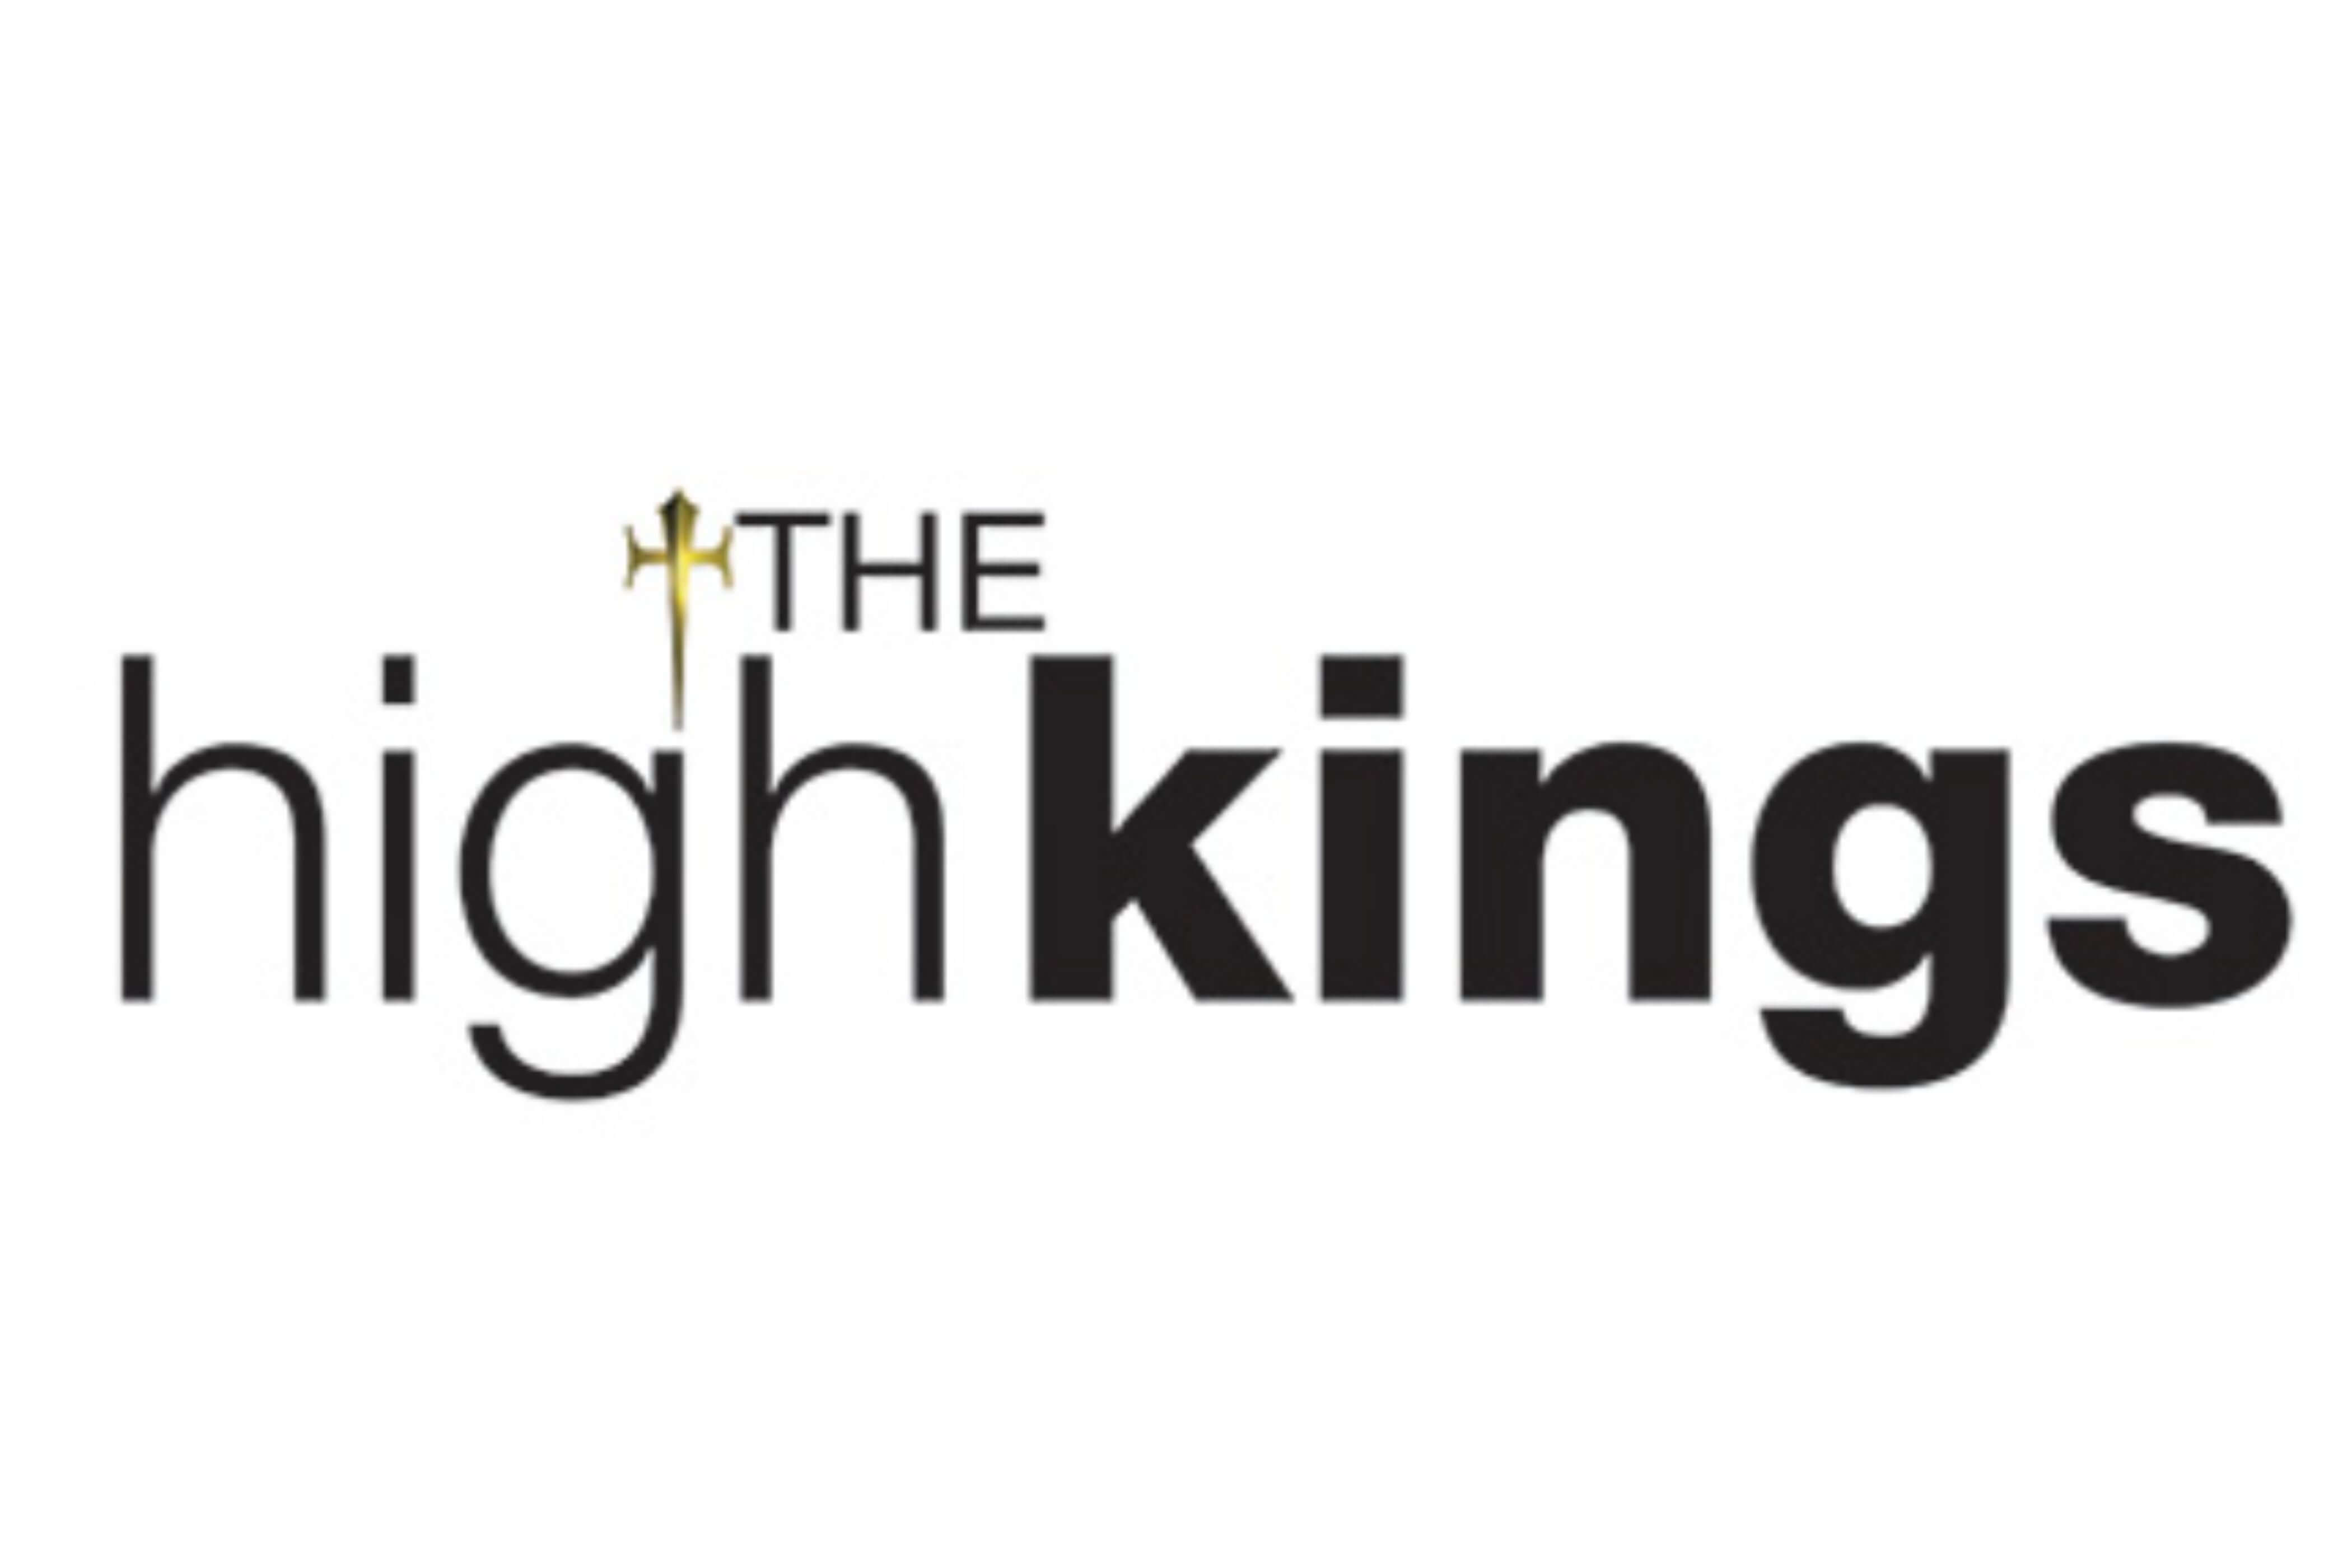 The High Kings band logo